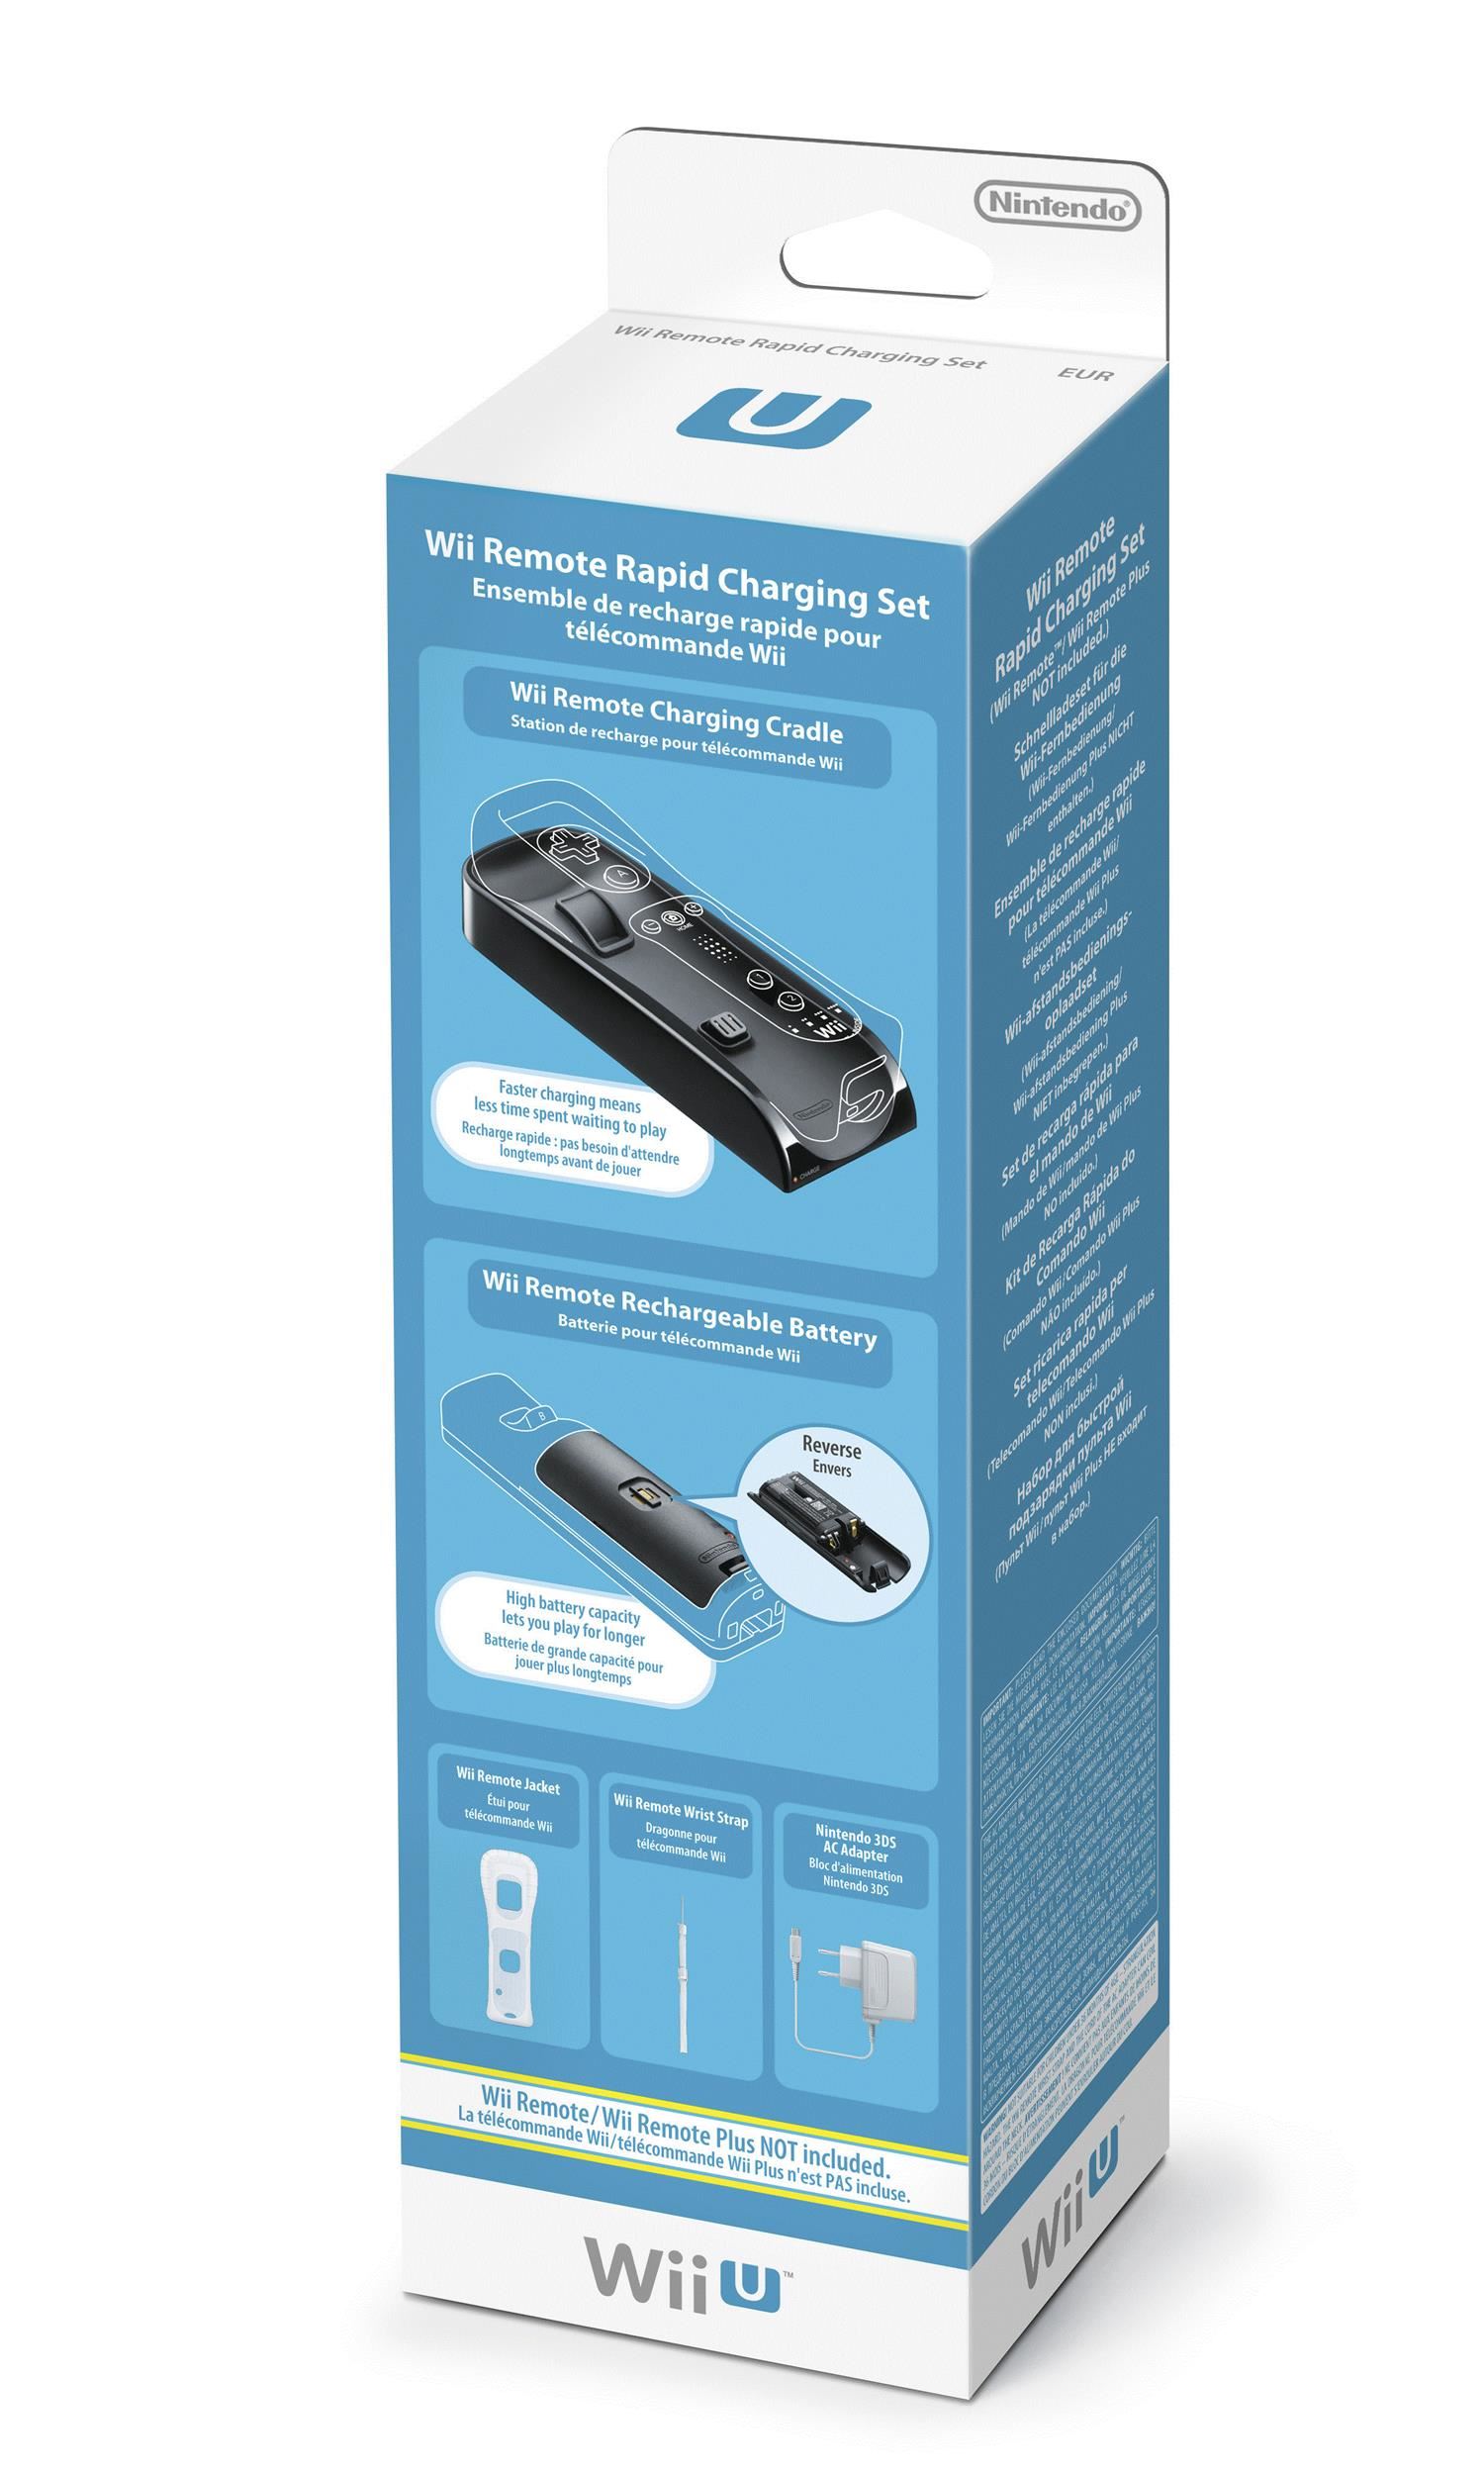 Buy Nintendo Remote Rapid Charging Set (for Wii & Wiiu)